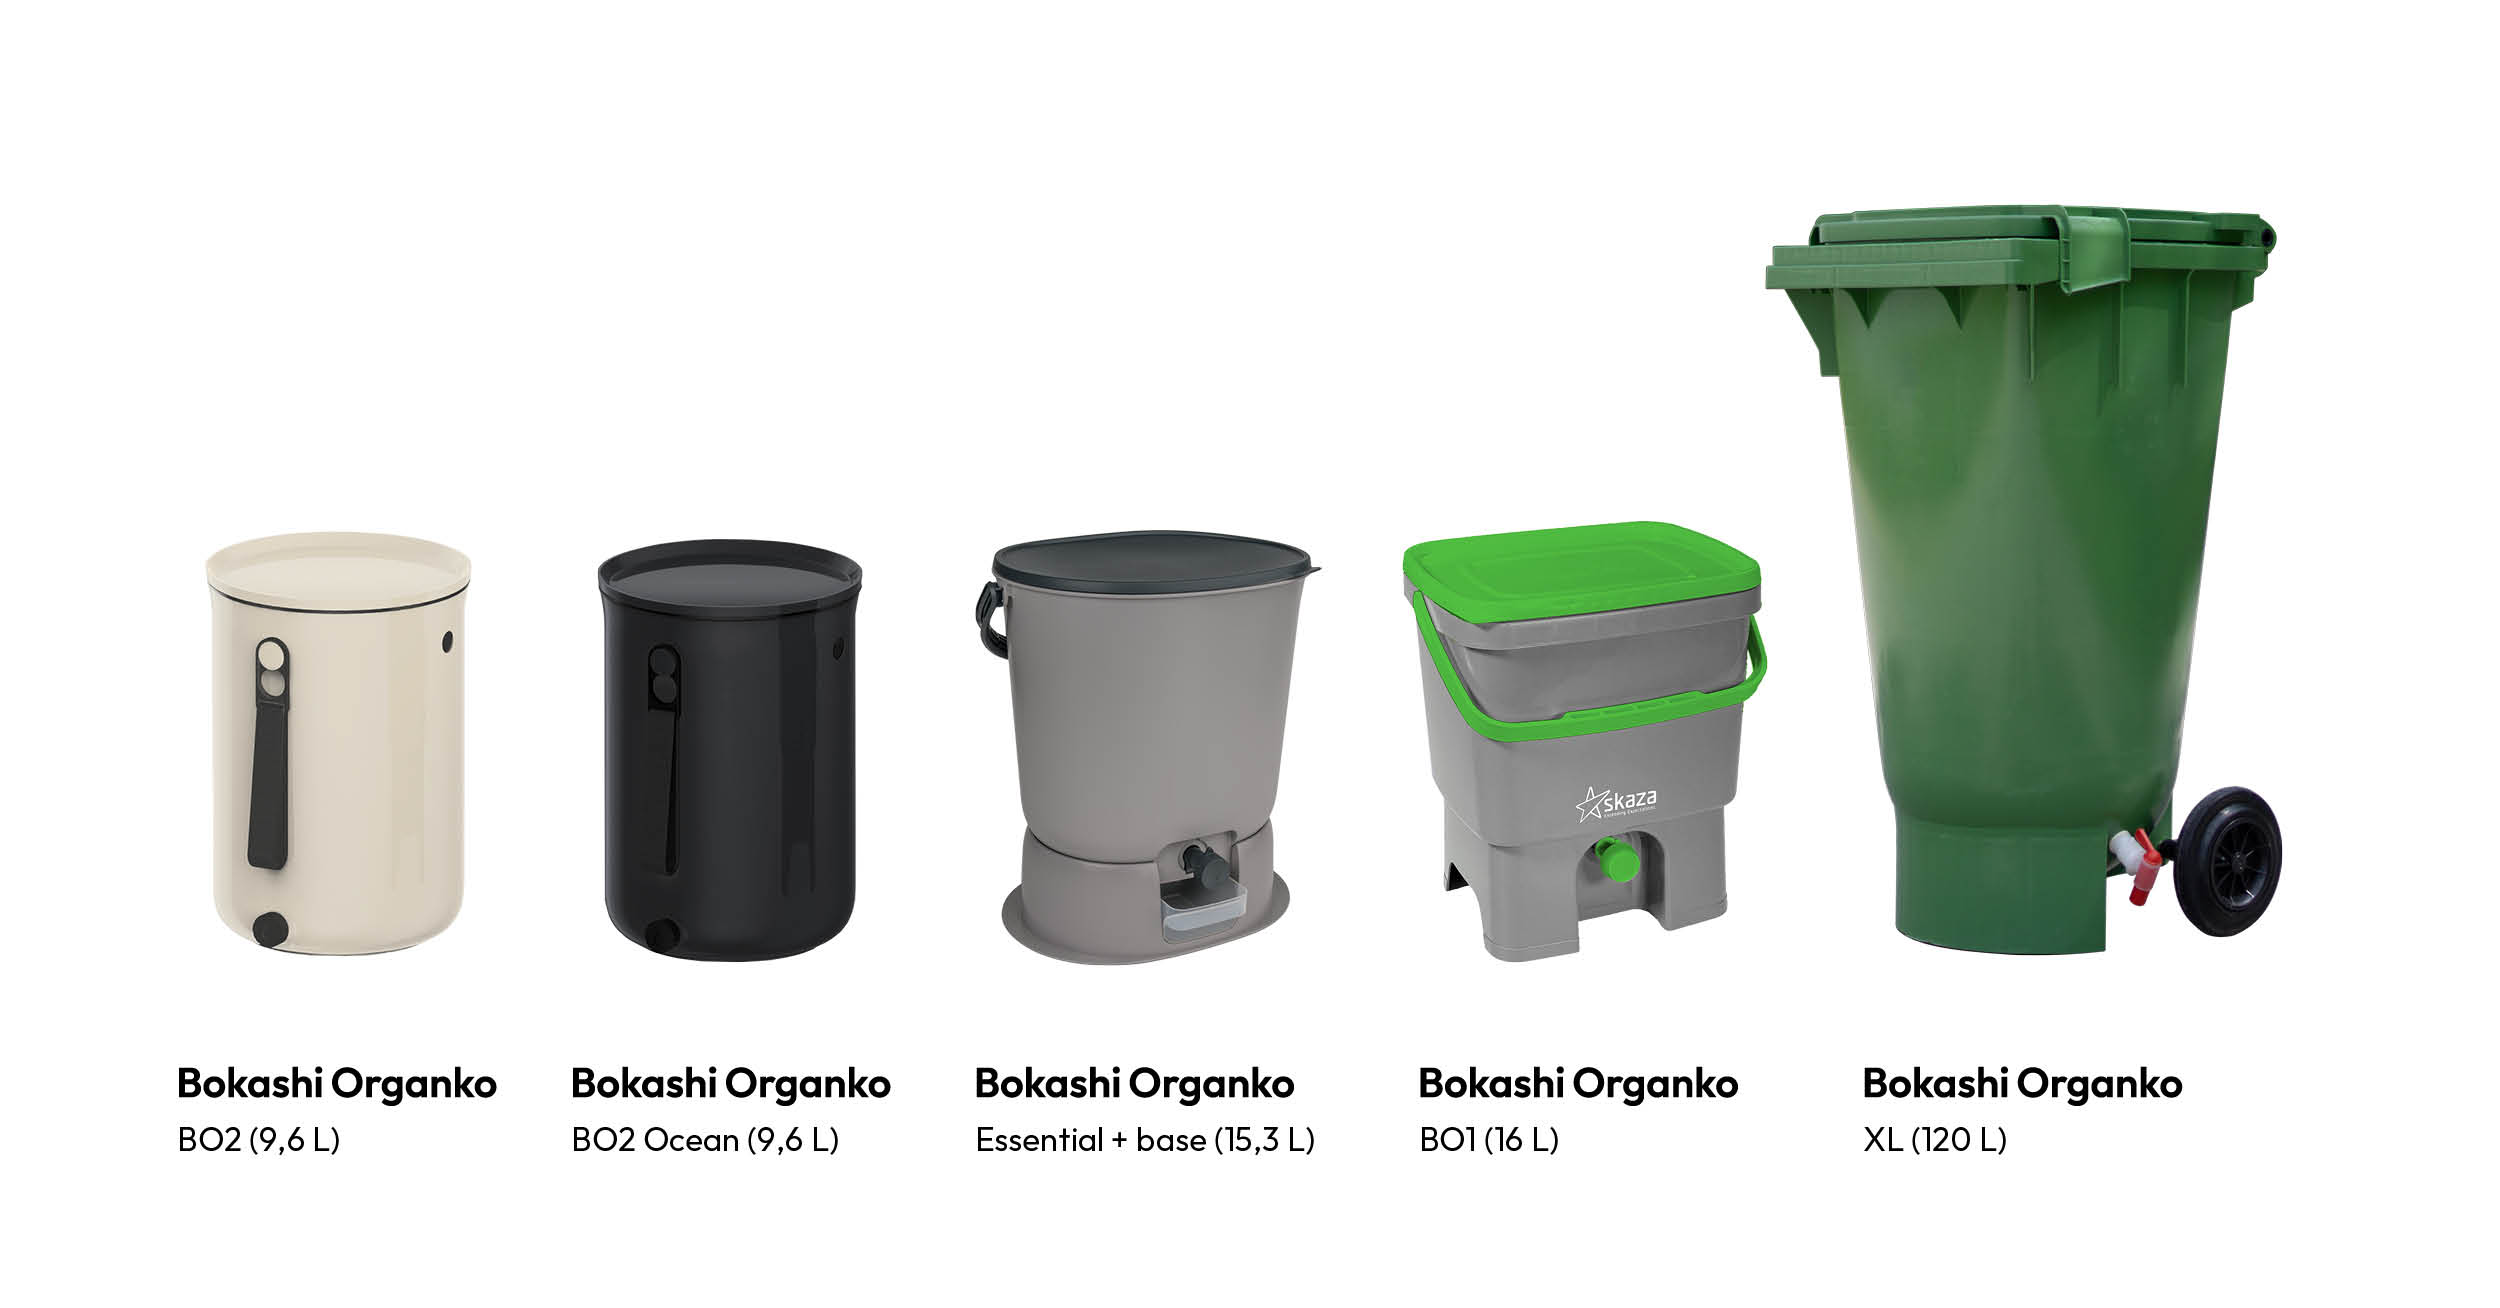 Bokashi composters